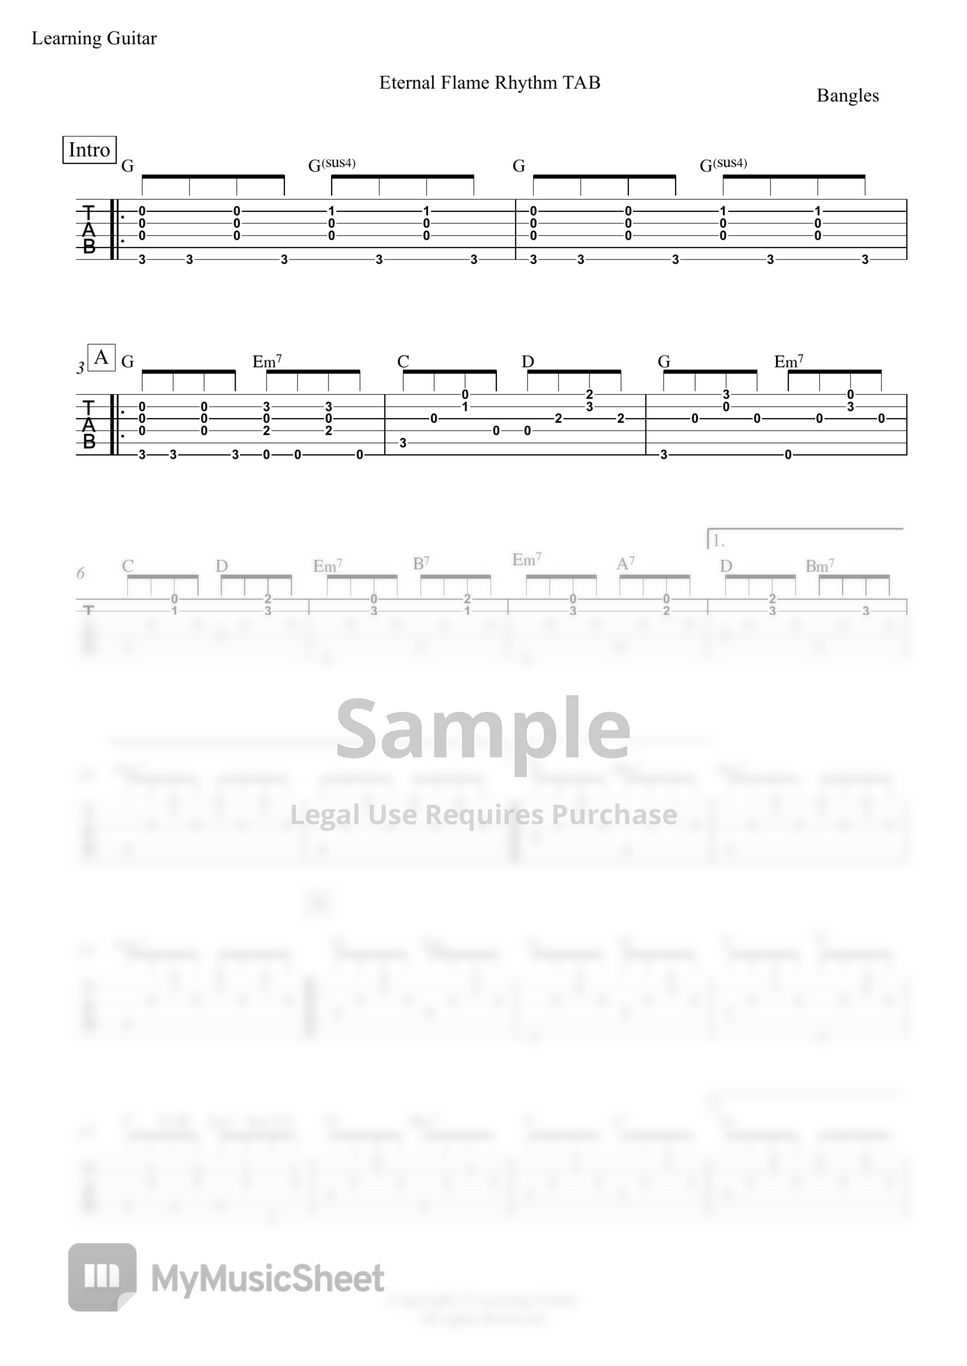 Bangles - Eternal Flame (Rhythm TAB) by Learning Guitar